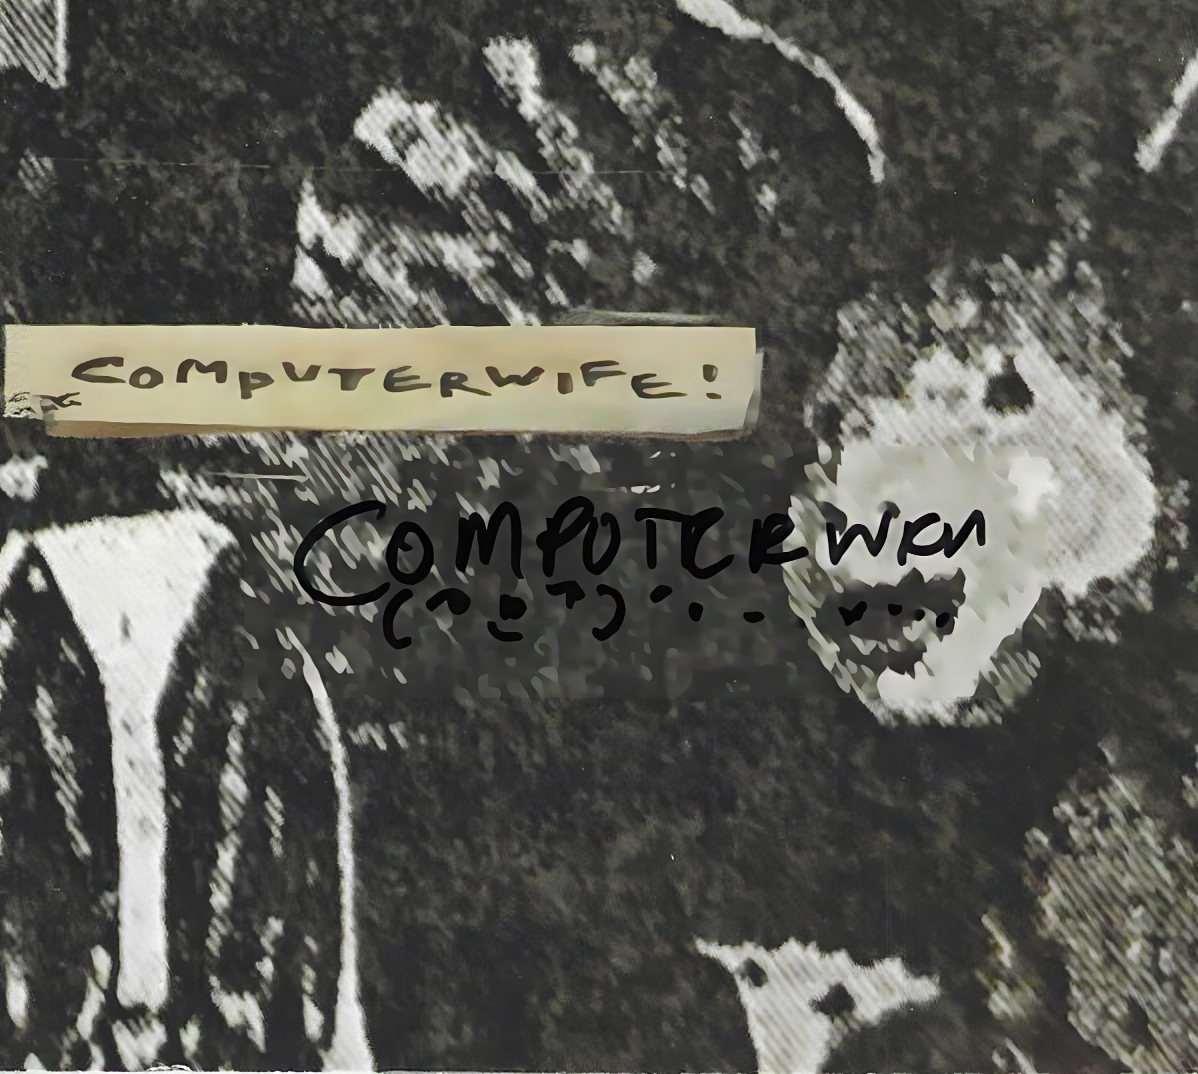 Computerwife - Computerwife